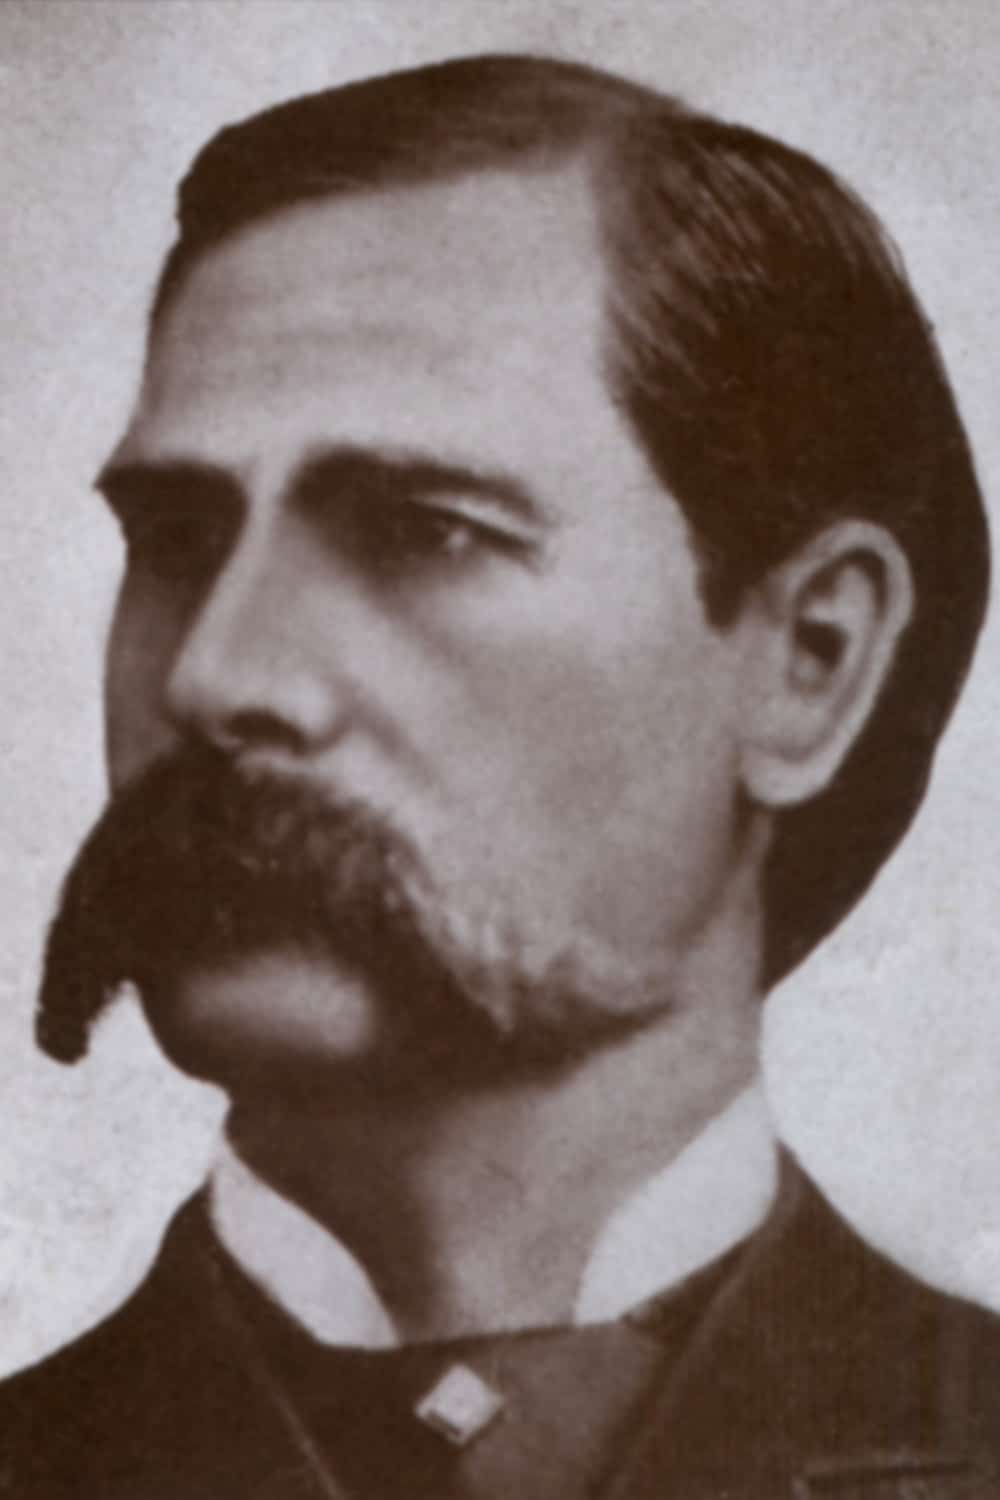 Wyatt Earp – 1848 to 1929